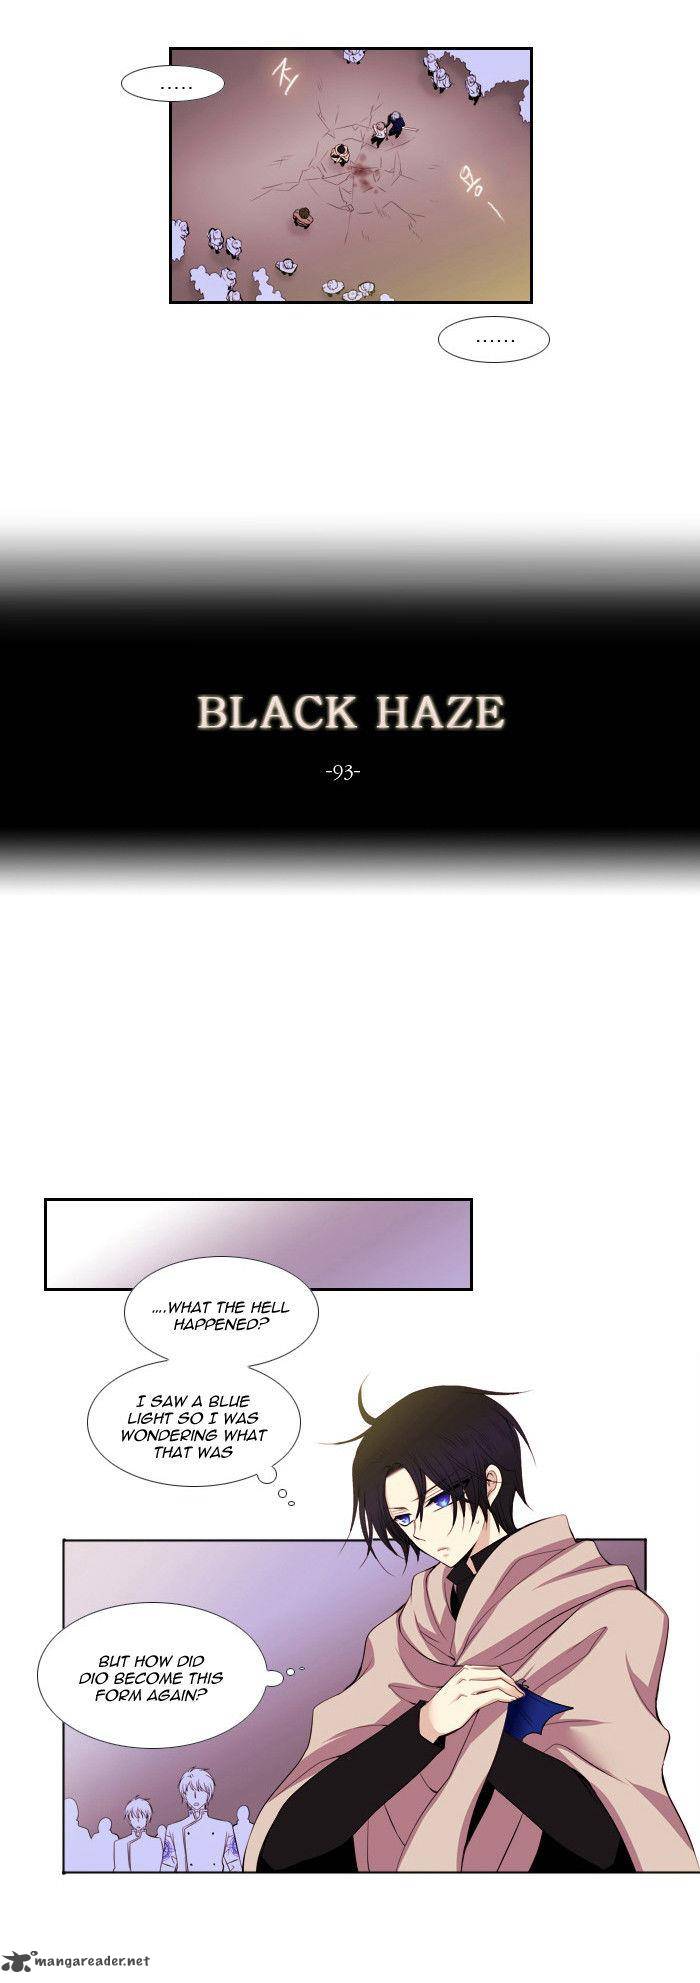 Black Haze Chapter 93 Page 2